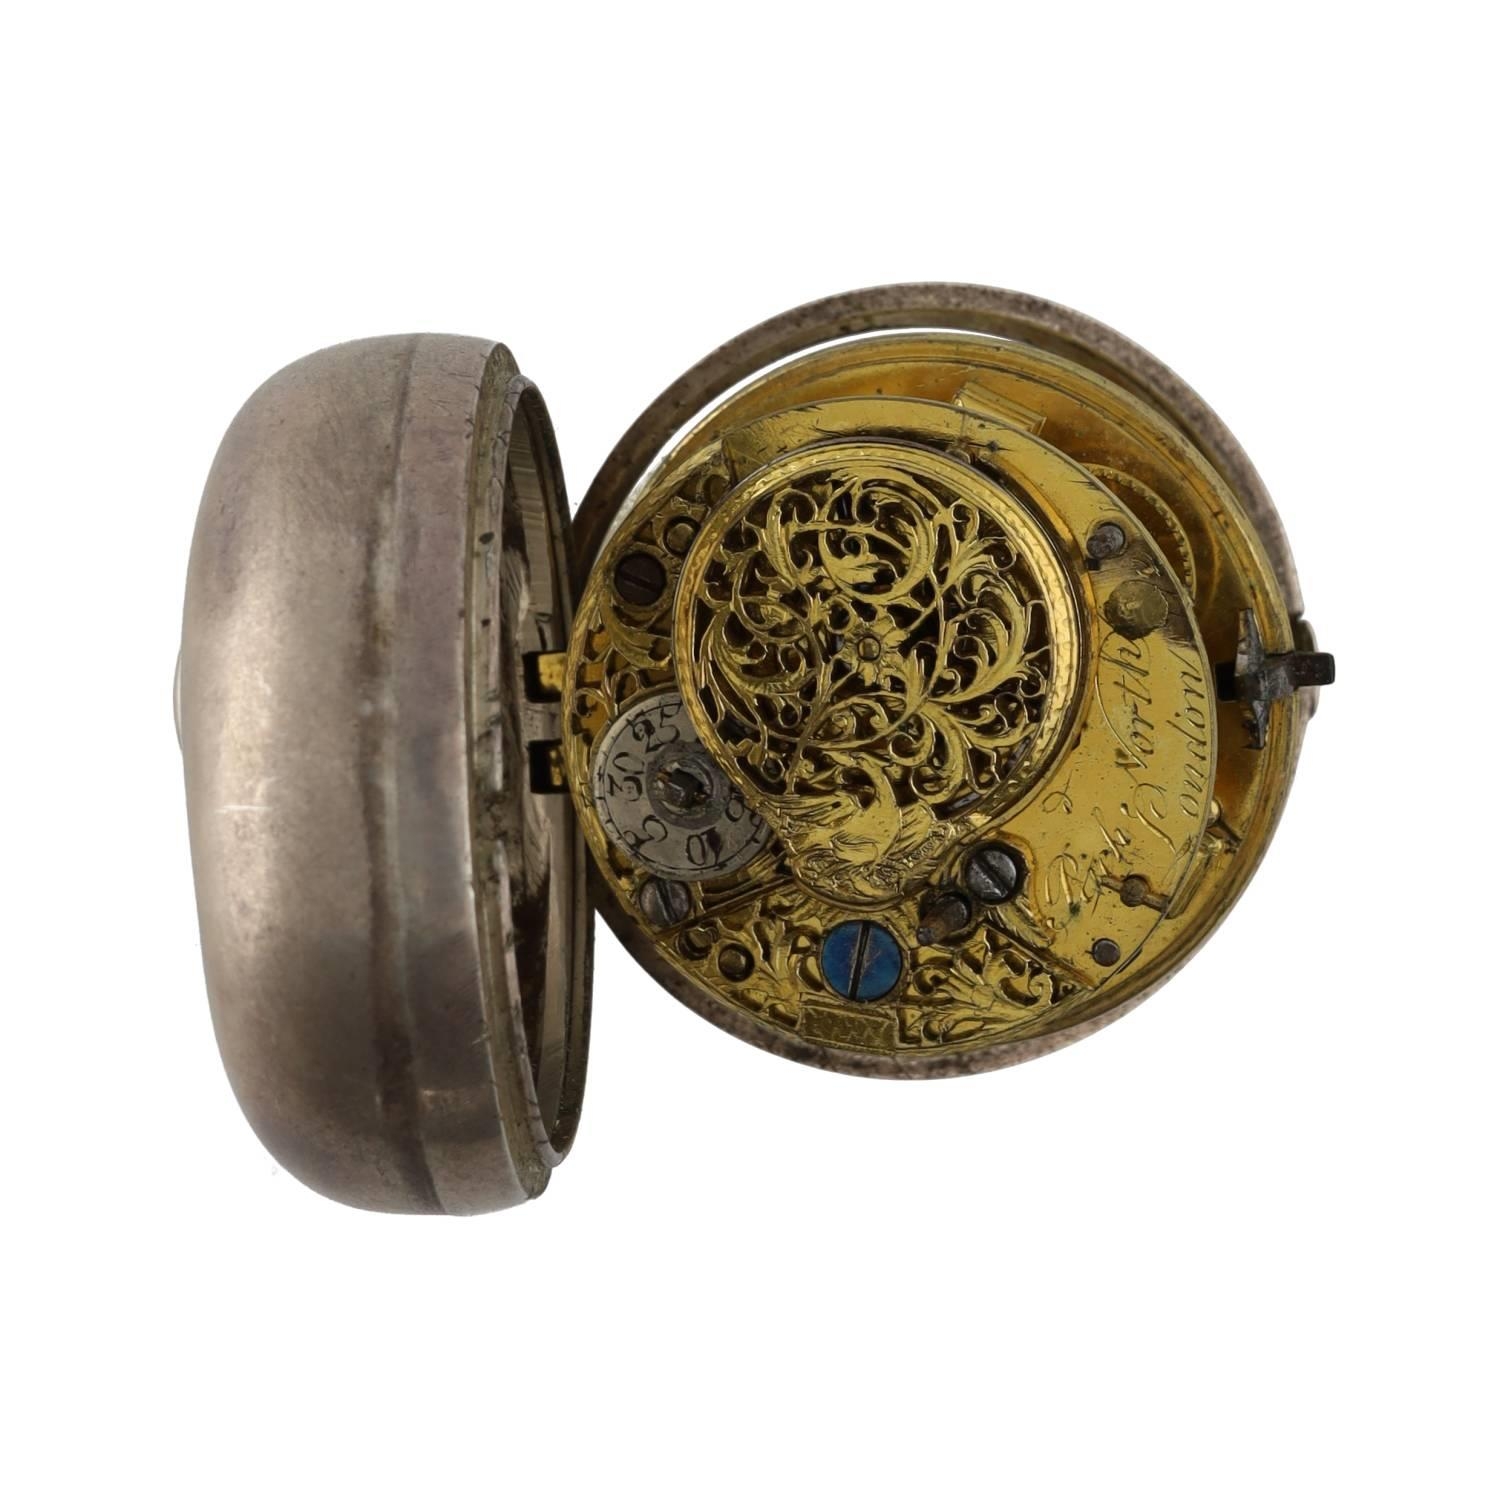 Richard North, London - George III silver pair cased verge pocket watch, London 1772, the fusee - Image 3 of 6